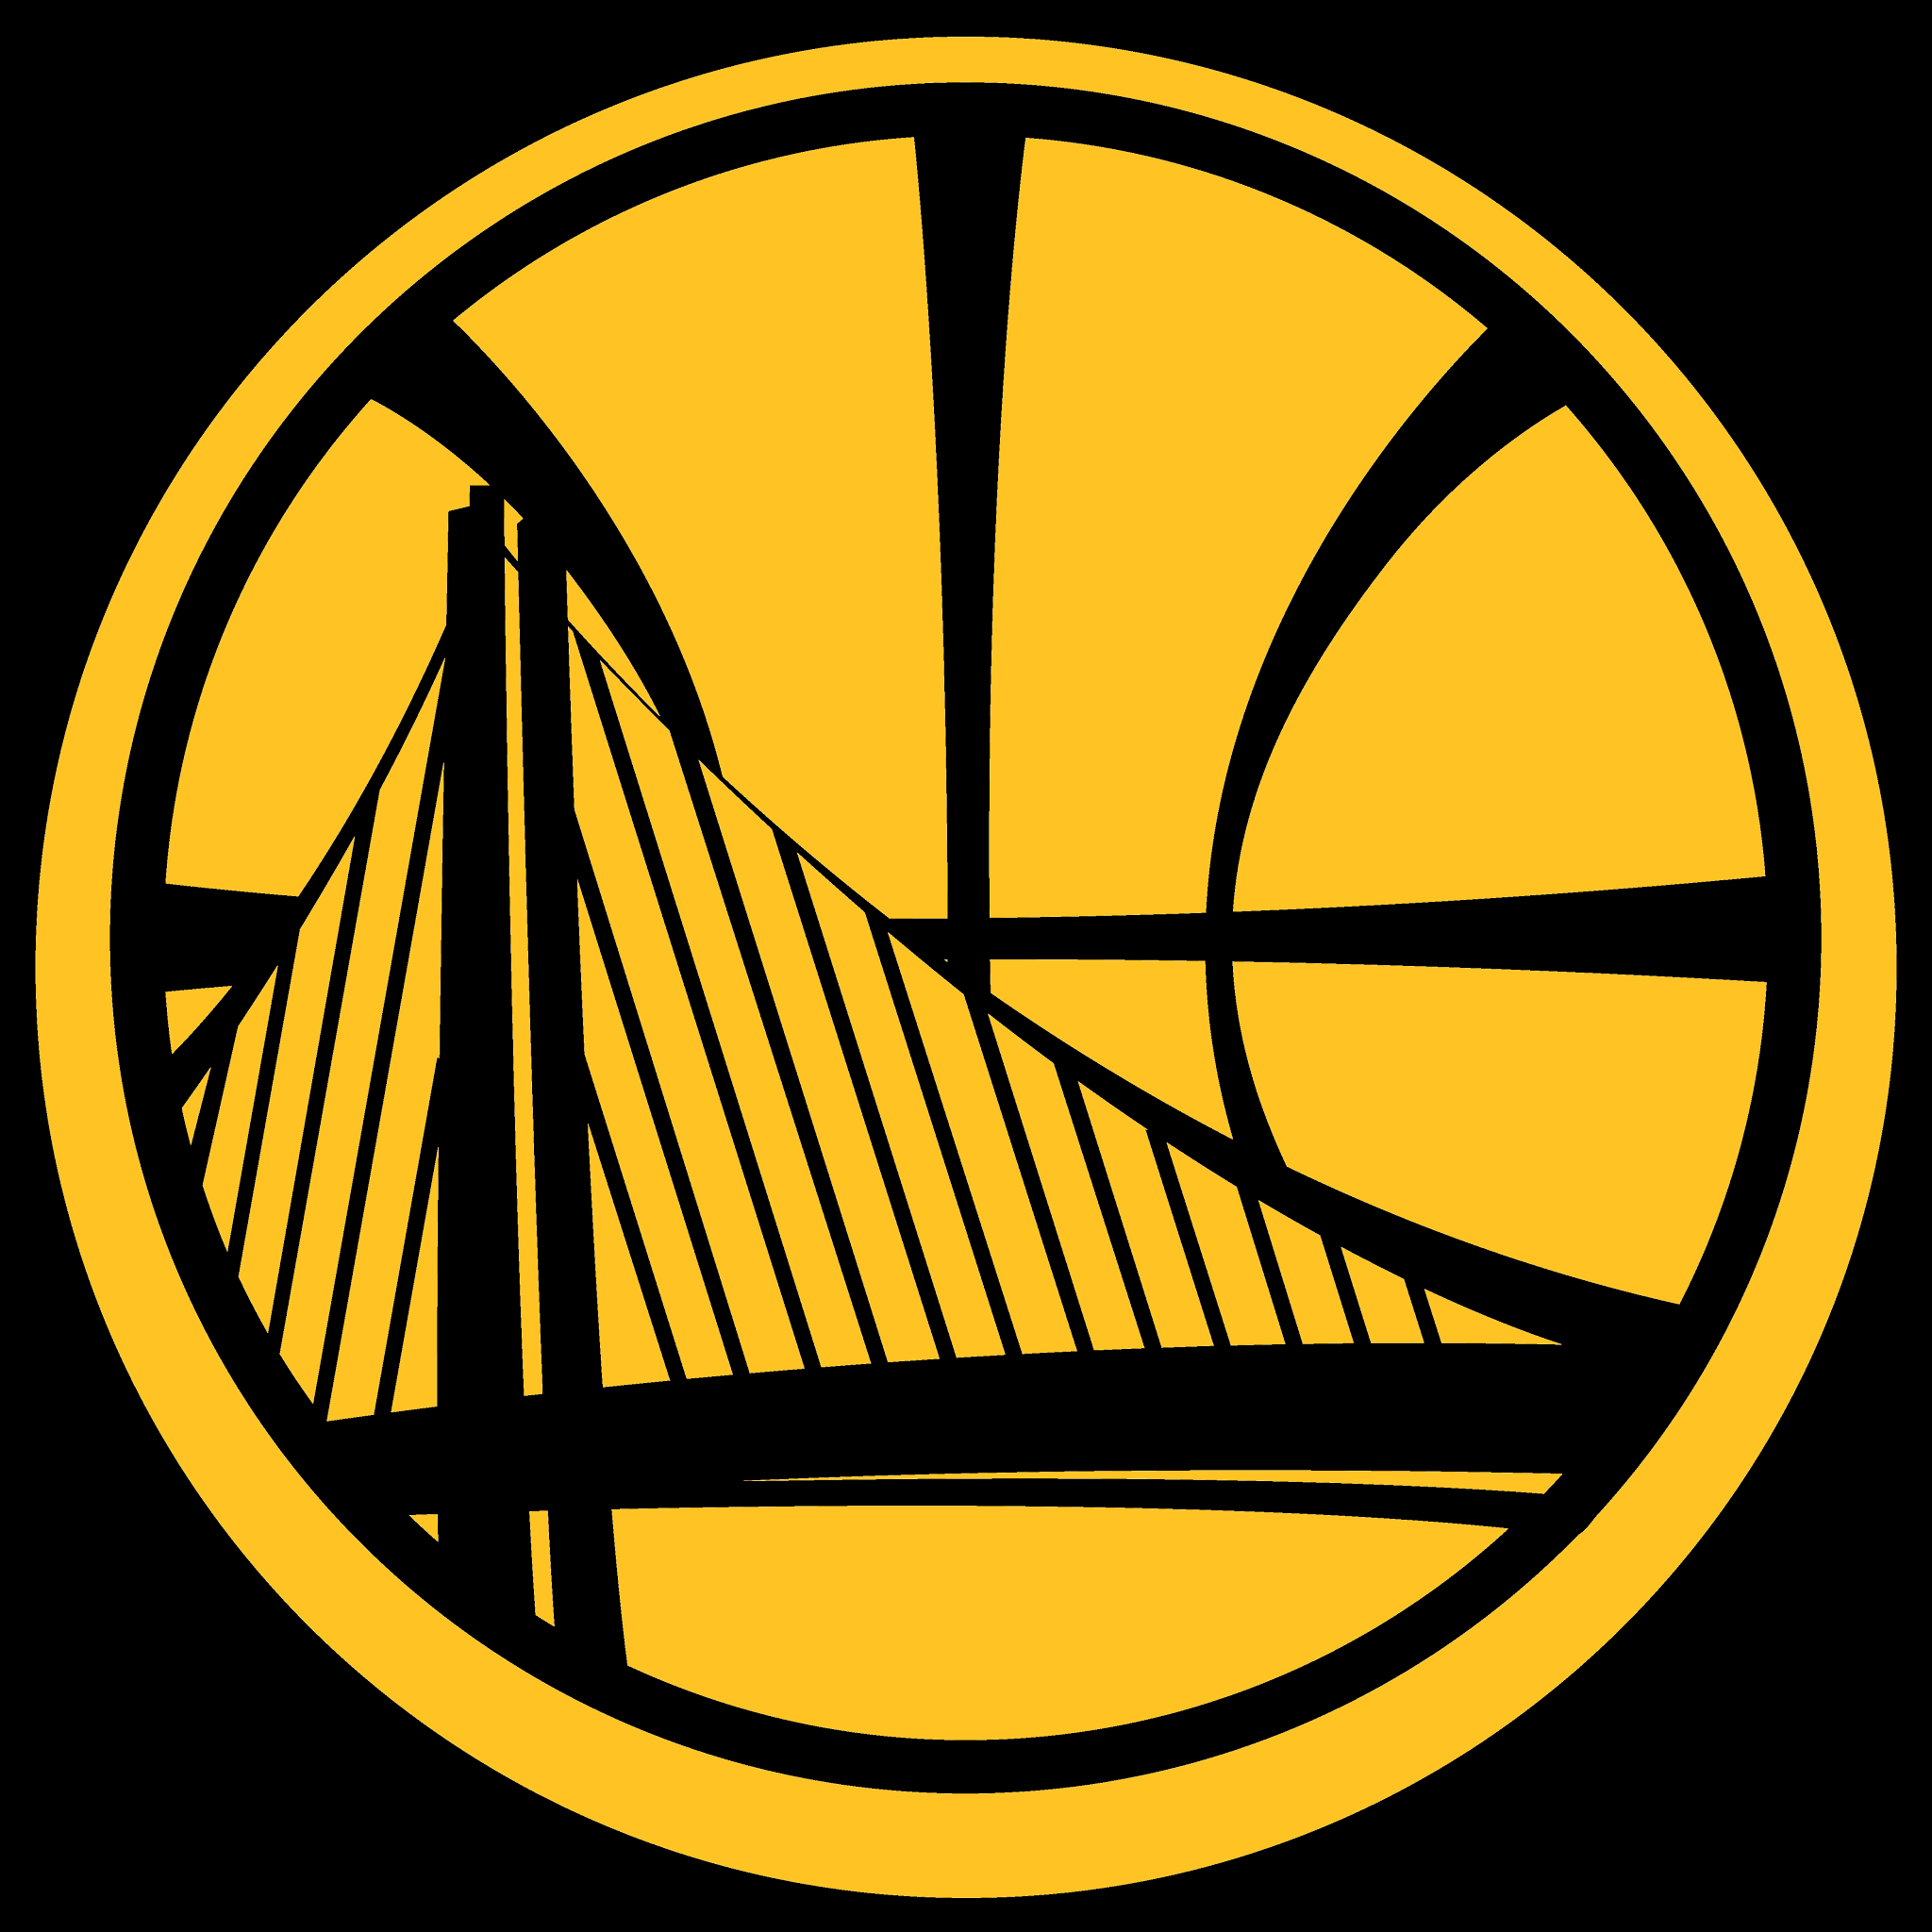 Warriors Logo - Golden state warriors logo png 8 PNG Image